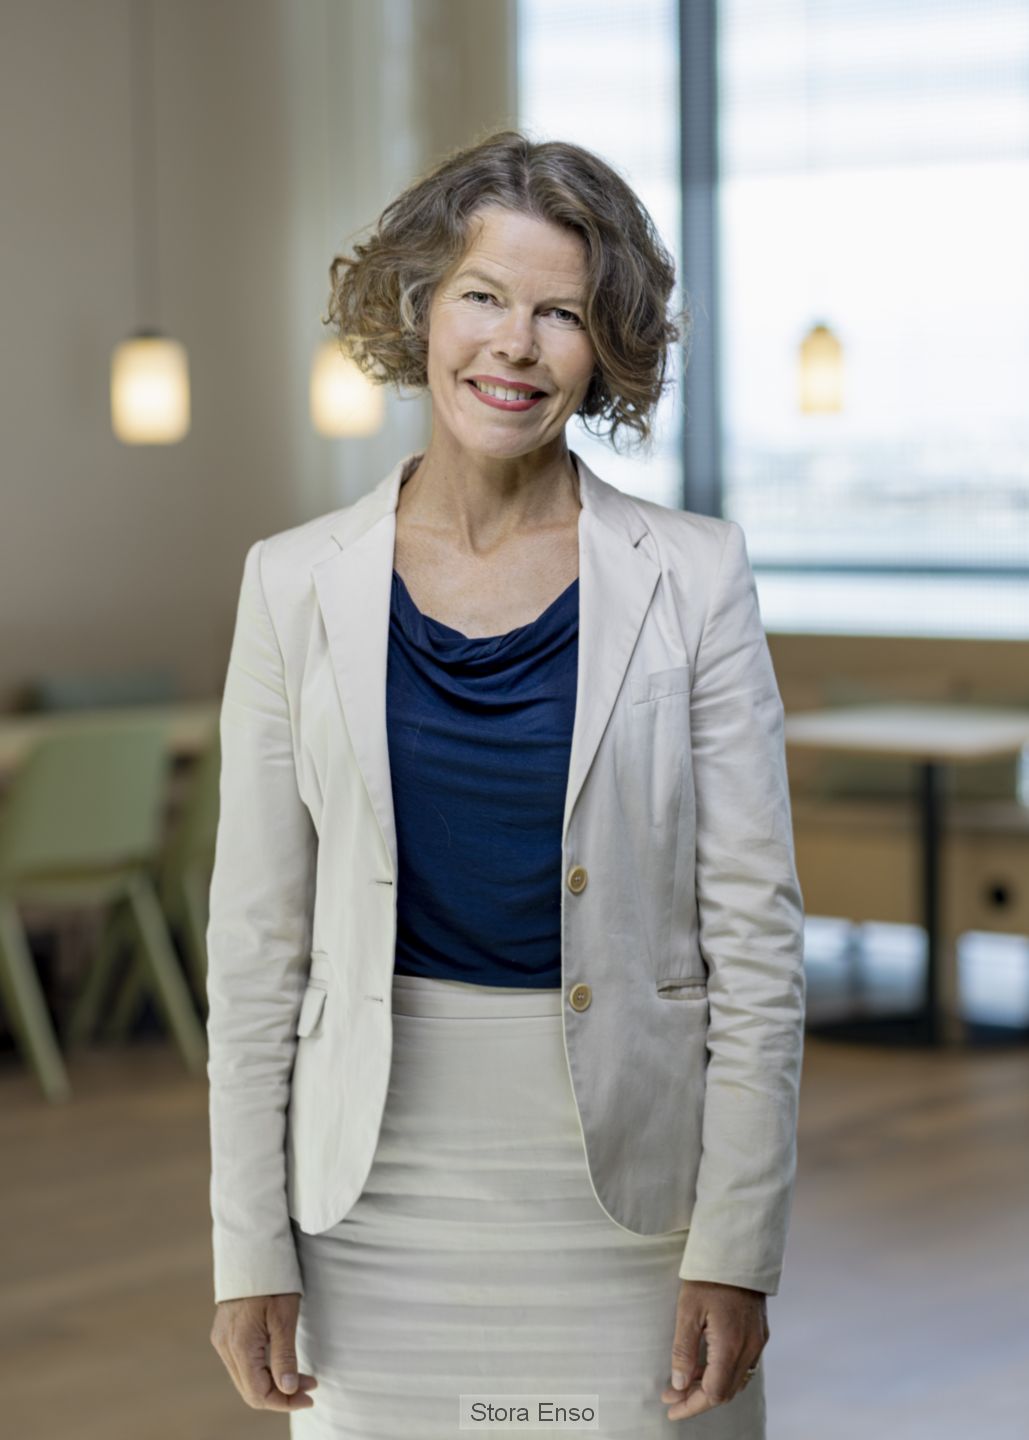 Johanna Hagelberg, Executive Vice President, Biomaterials division at Stora Enso